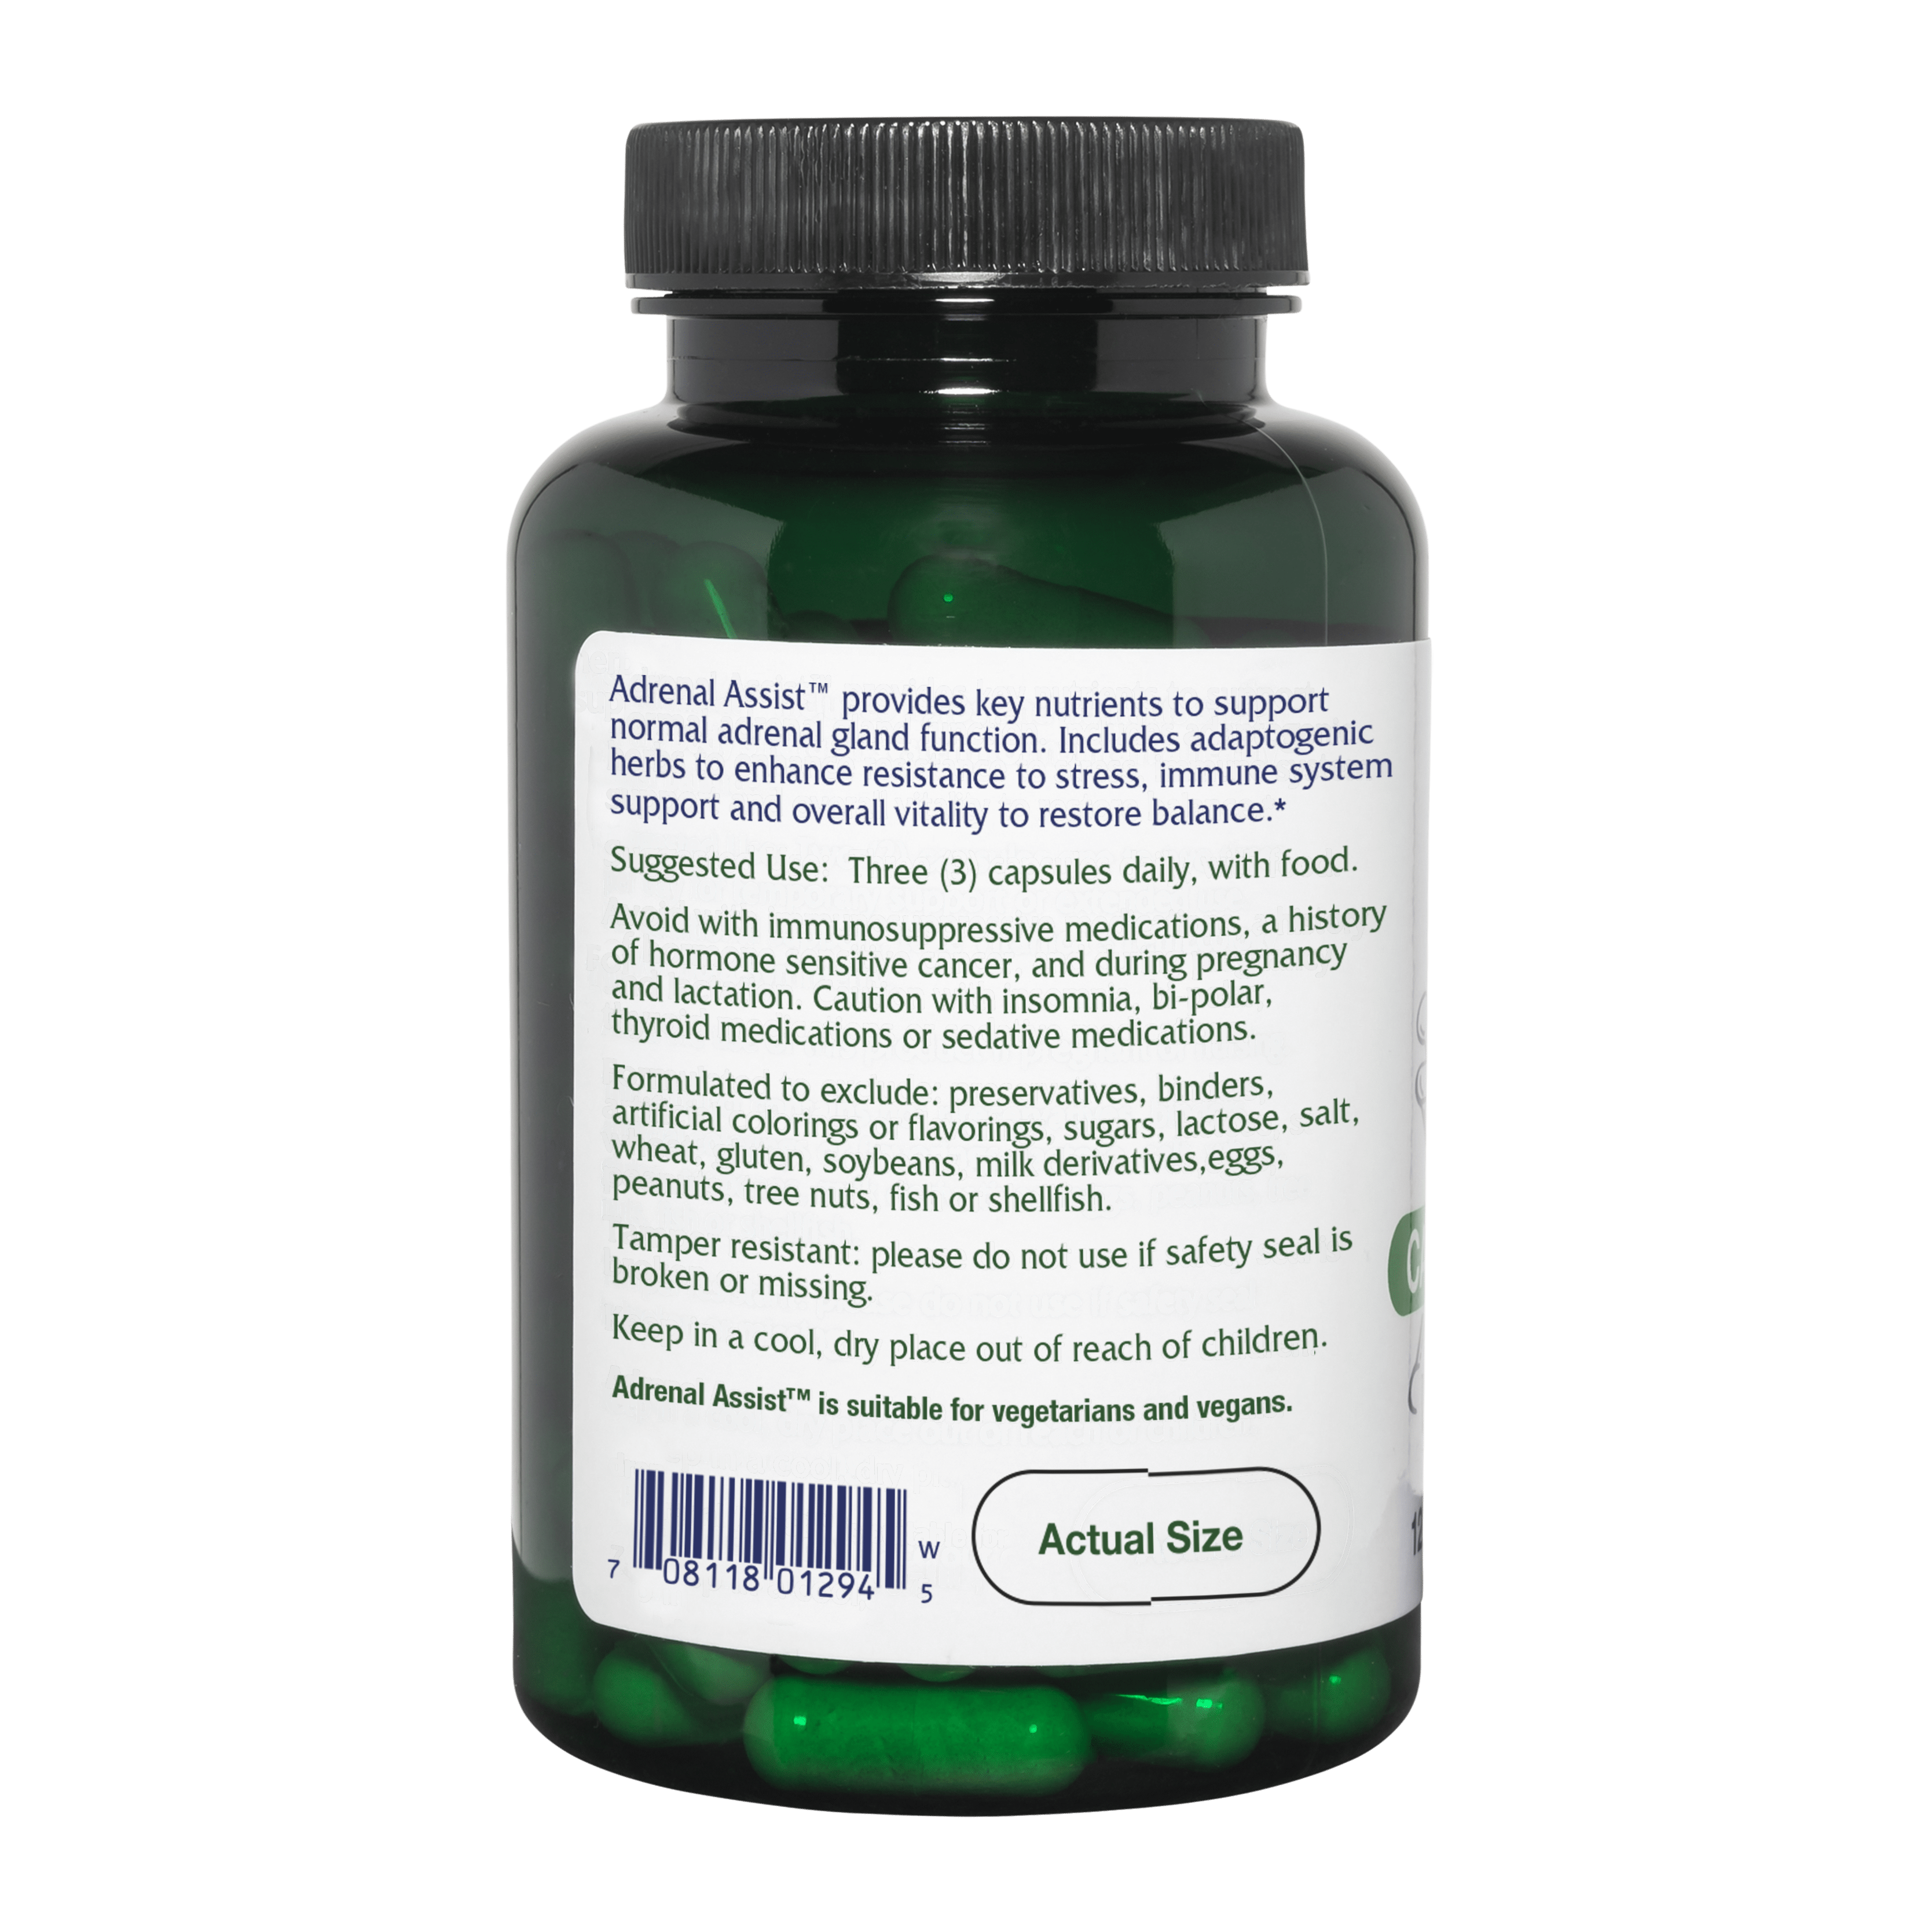 Adrenal Assist - 90 Capsules | Vitanica